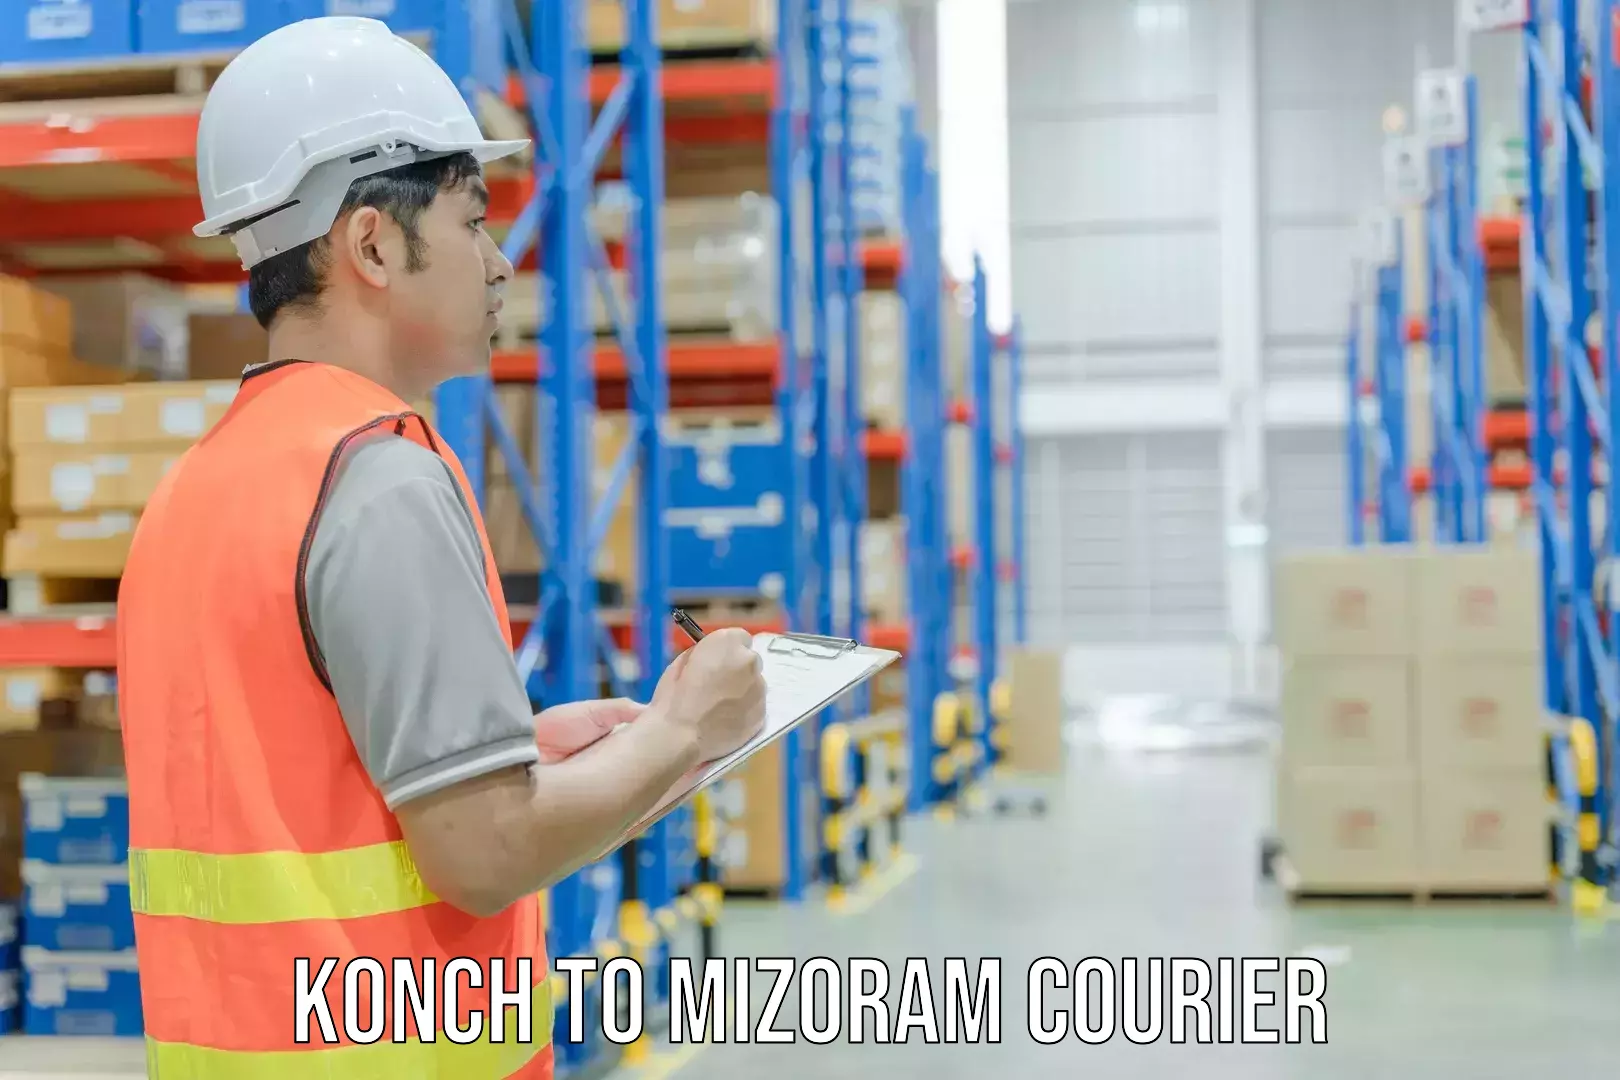 Courier service partnerships Konch to Mizoram